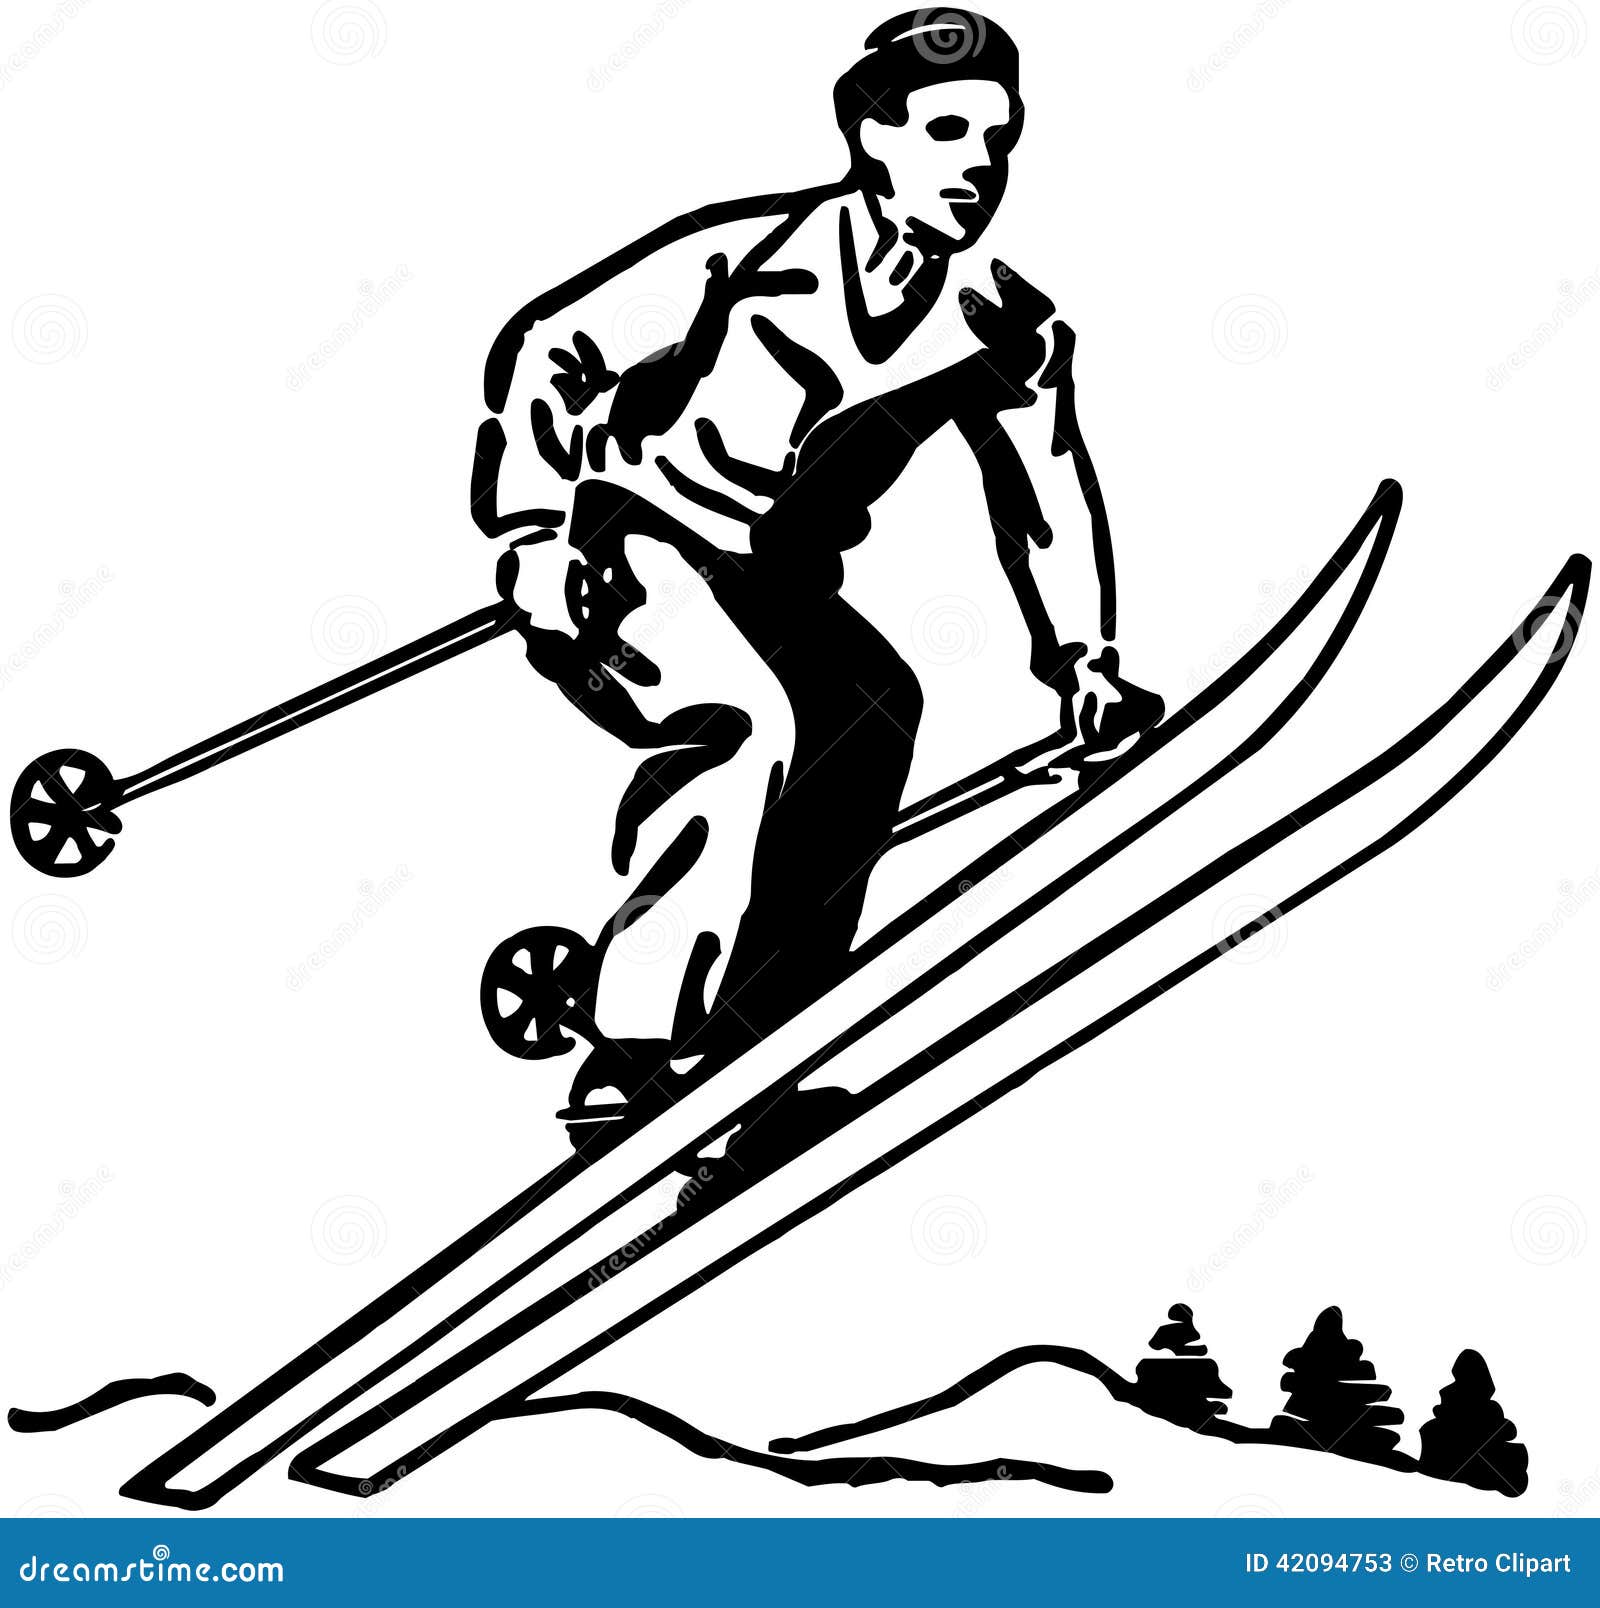 Skier stock vector. Illustration of vintage, mountains - 42094753